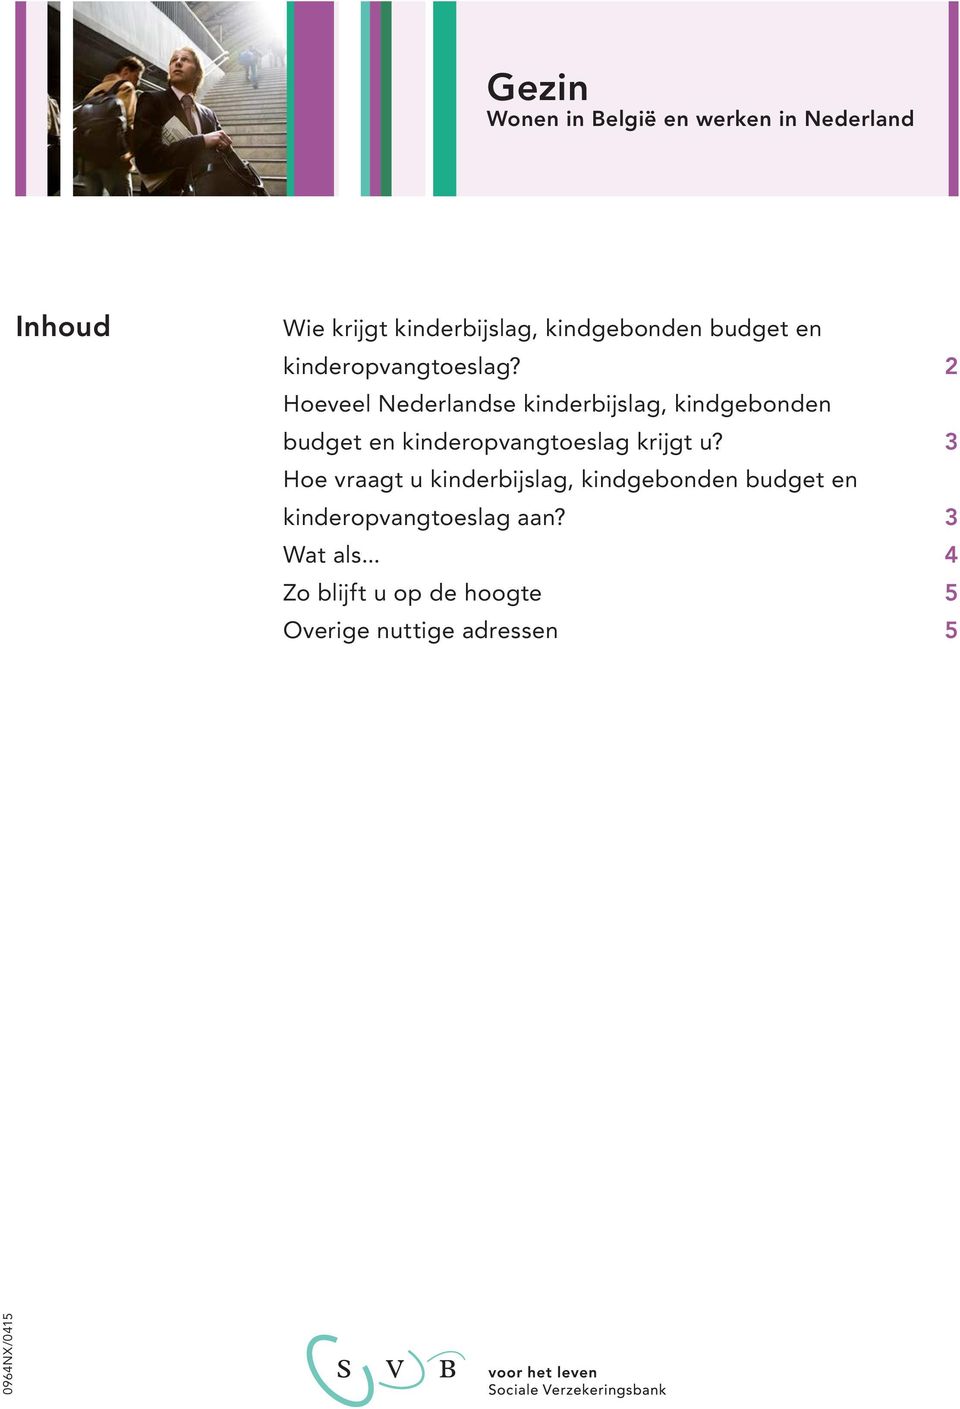 2 Hoeveel Nederlandse kinderbijslag, kindgebonden budget en kinderopvangtoeslag krijgt u?